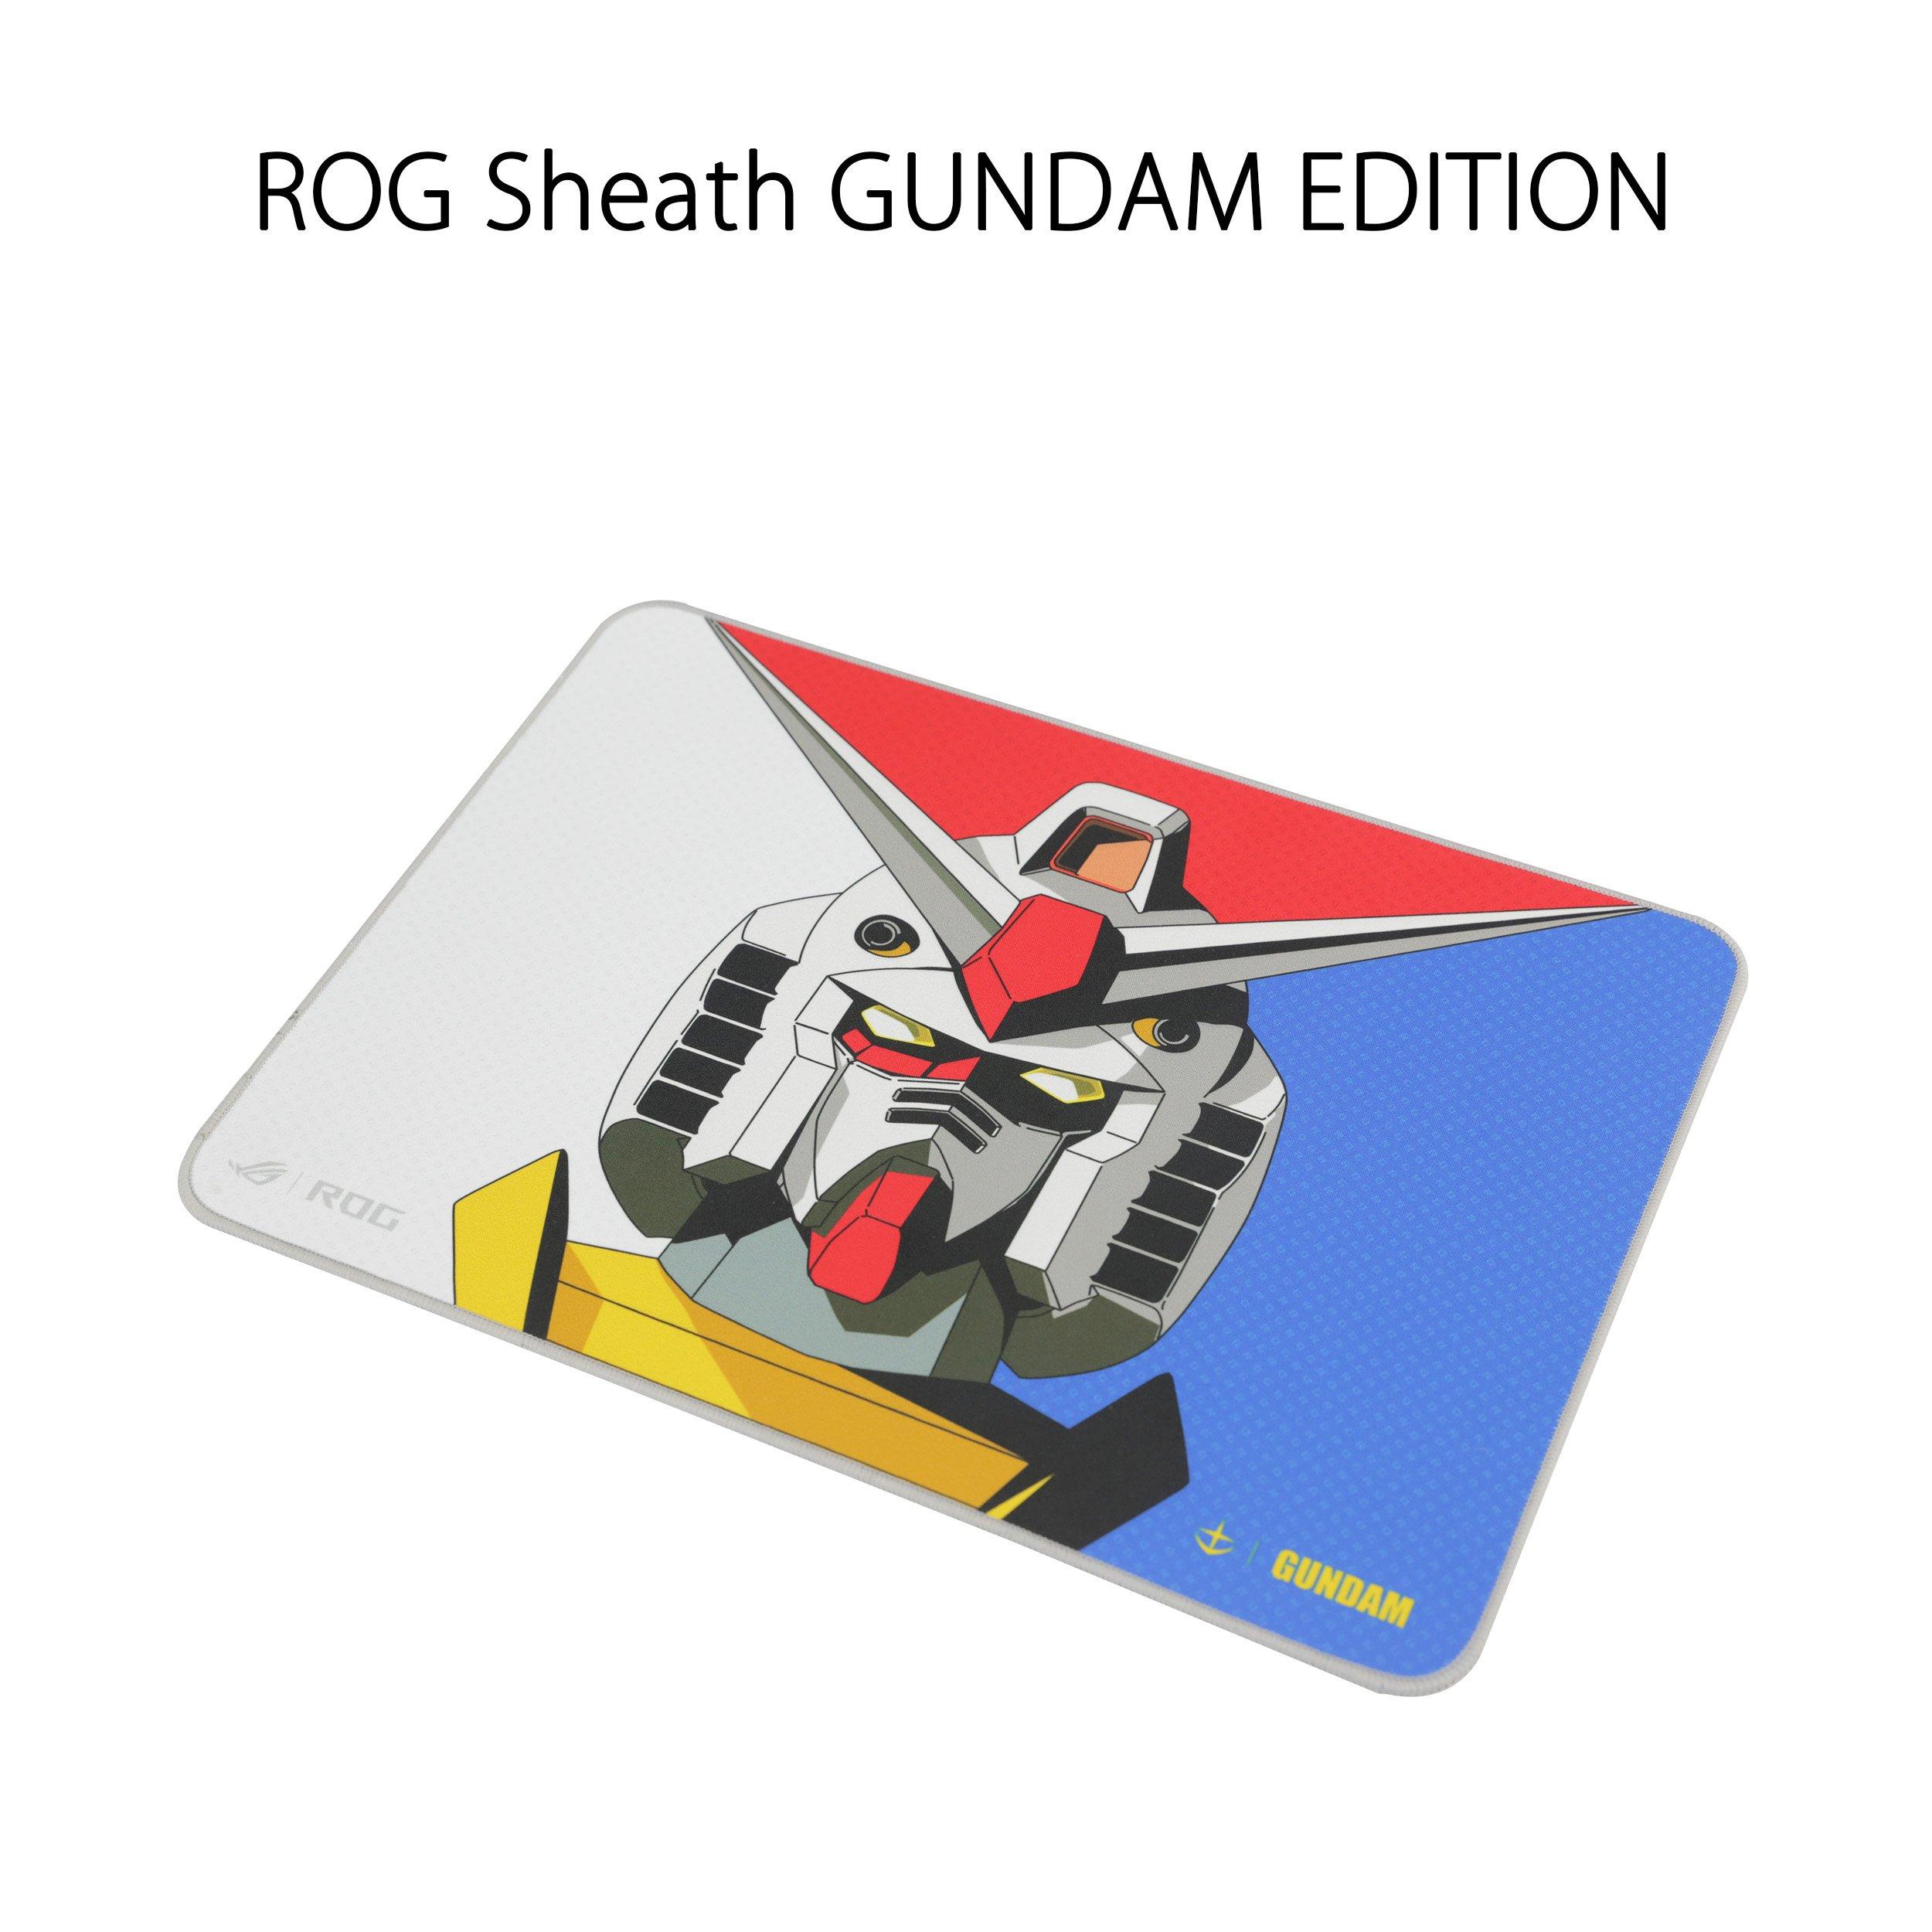 ASUS ROG Sheath Gundam Edition Mouse Pad